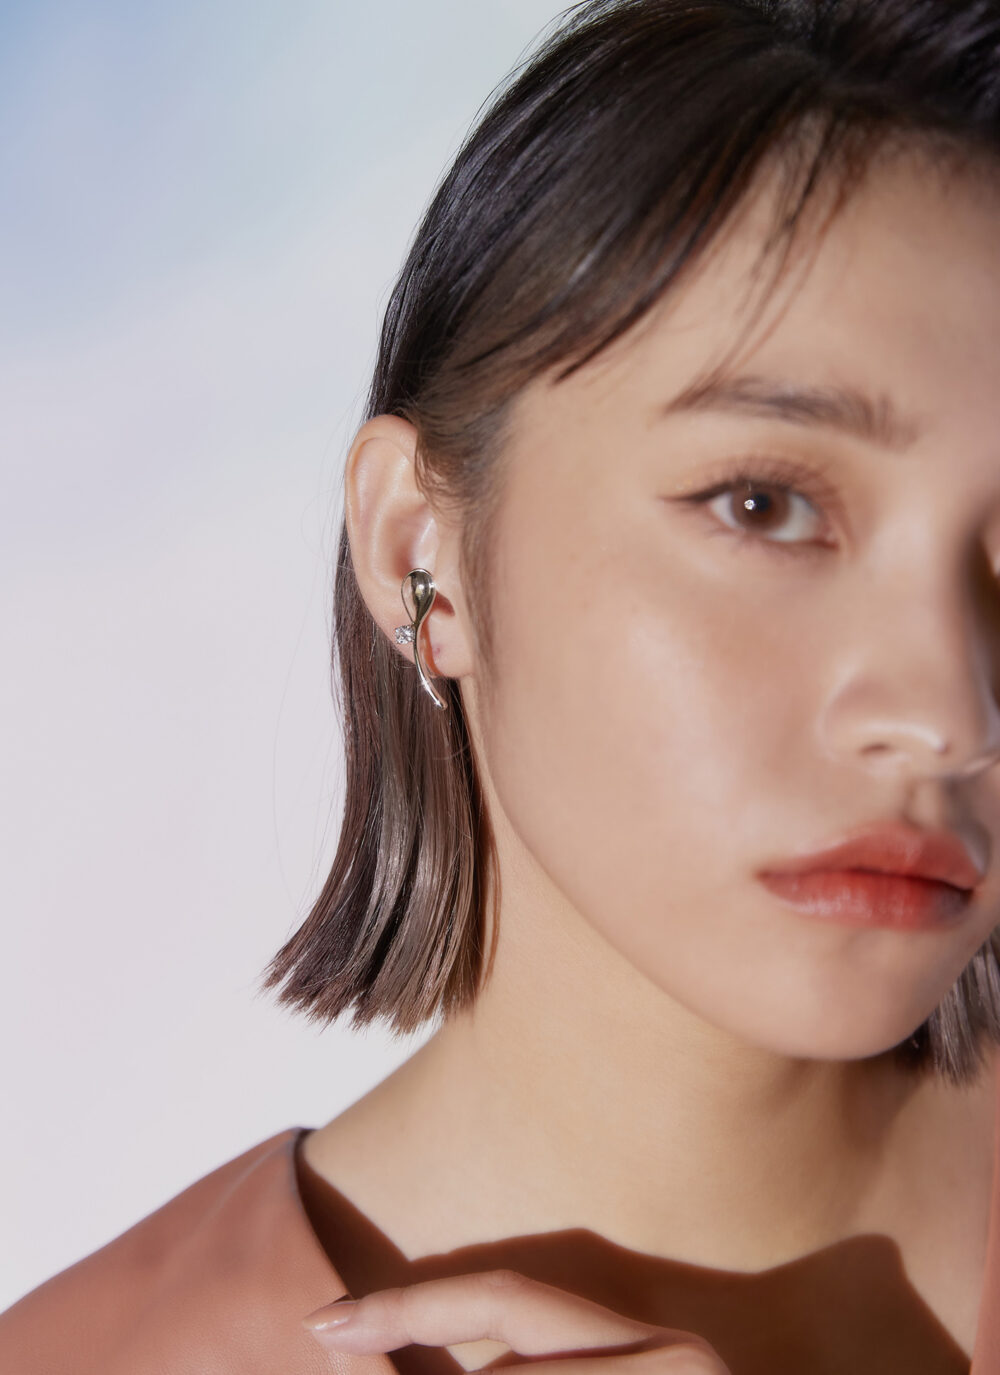 Eco安珂,韓國飾品,韓國耳環,耳針式耳環,矽膠夾耳環,透明耳夾耳環,餐具耳環,湯匙耳環